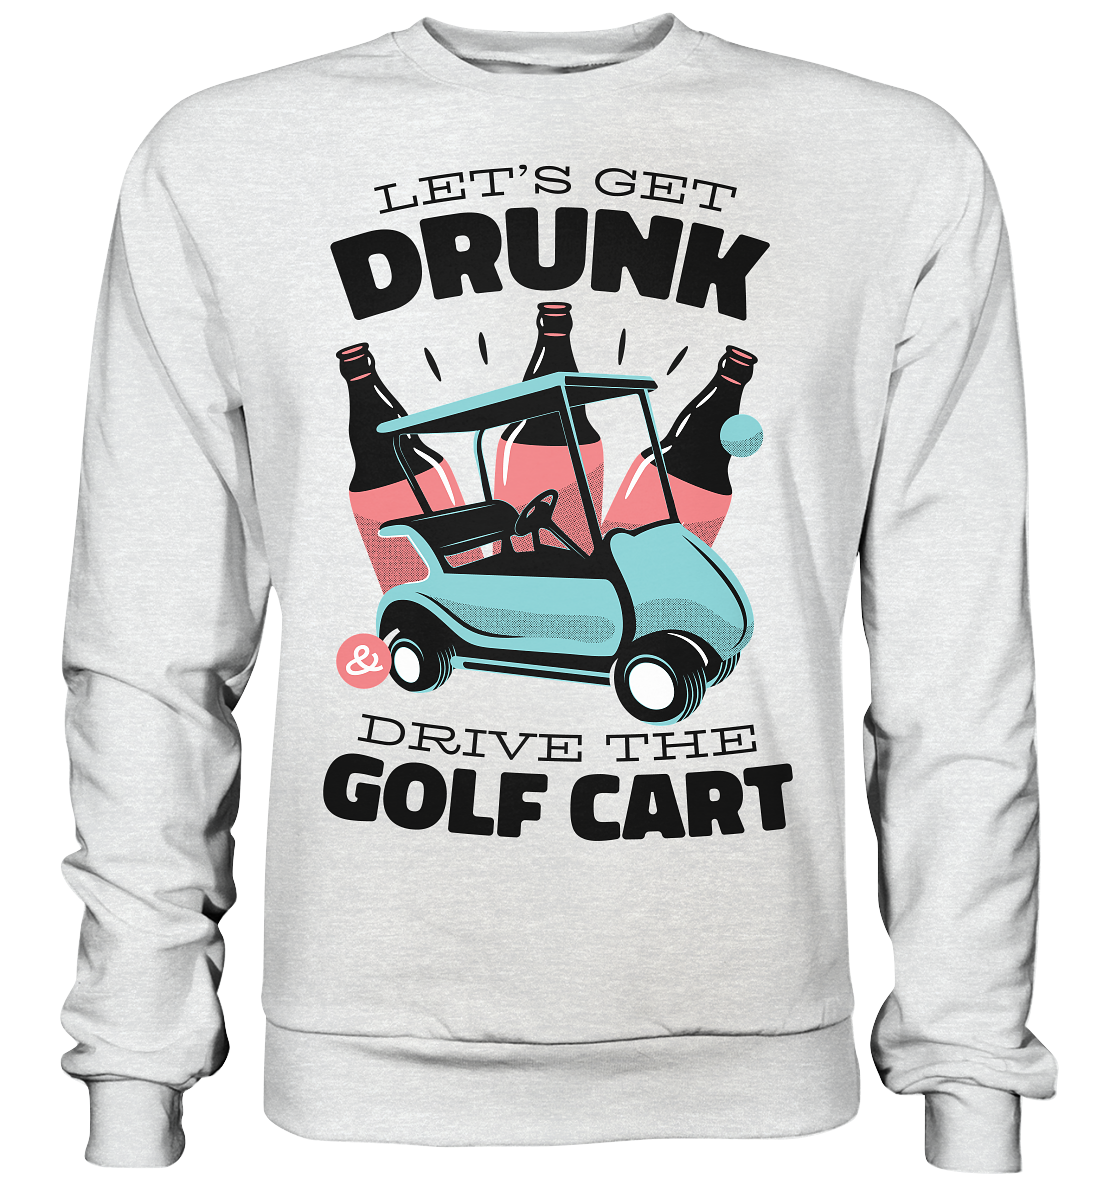 Let's get drunk drive the golf cart - Premium Sweatshirt